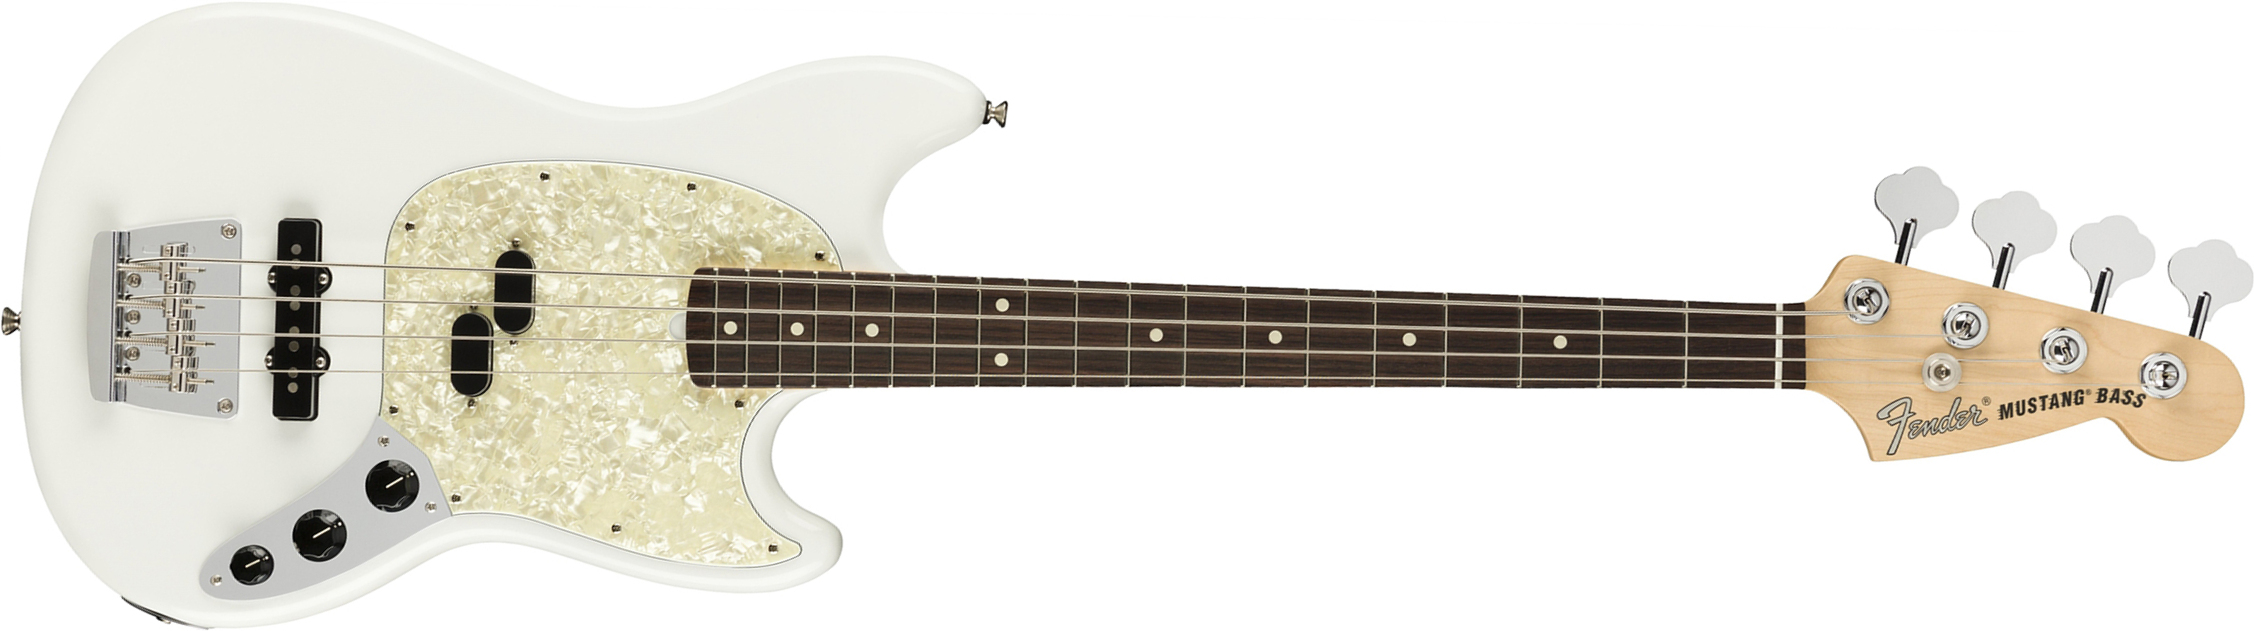 Fender Mustang Bass American Performer Usa Rw - Arctic White - Basse Électrique Enfants - Main picture